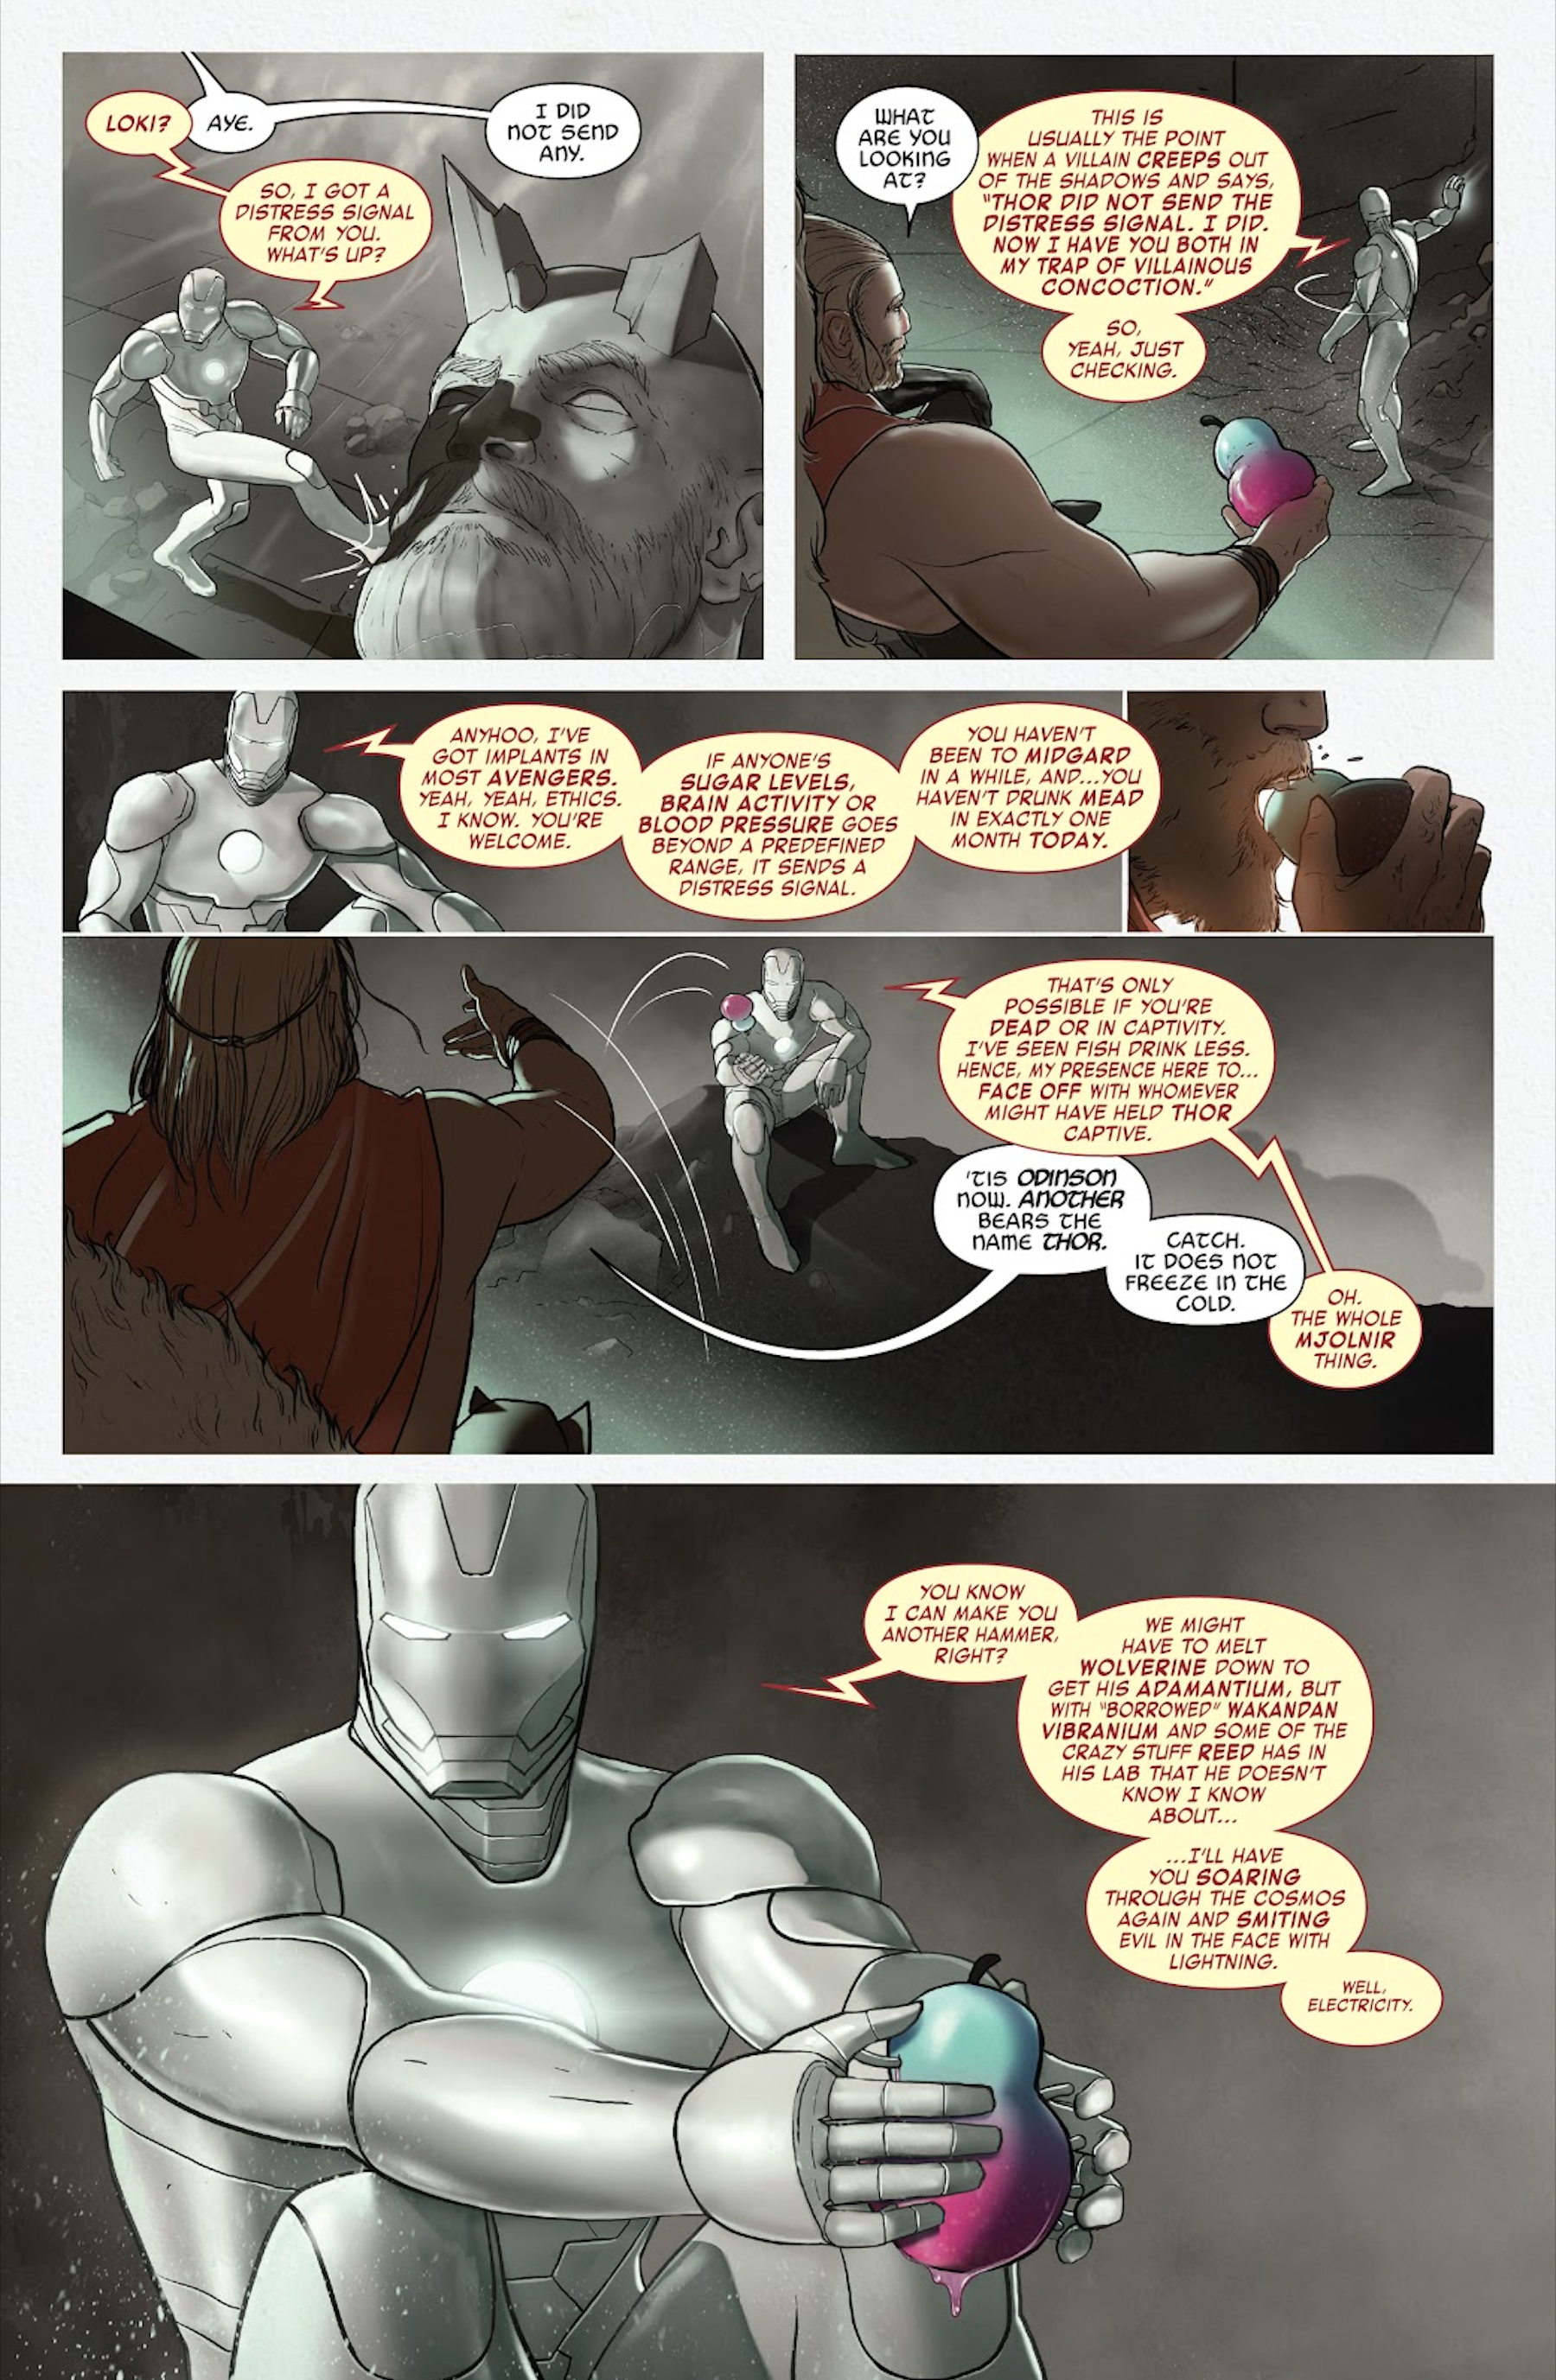 Iron Man offers an artificial Mjolnir to Thor-1